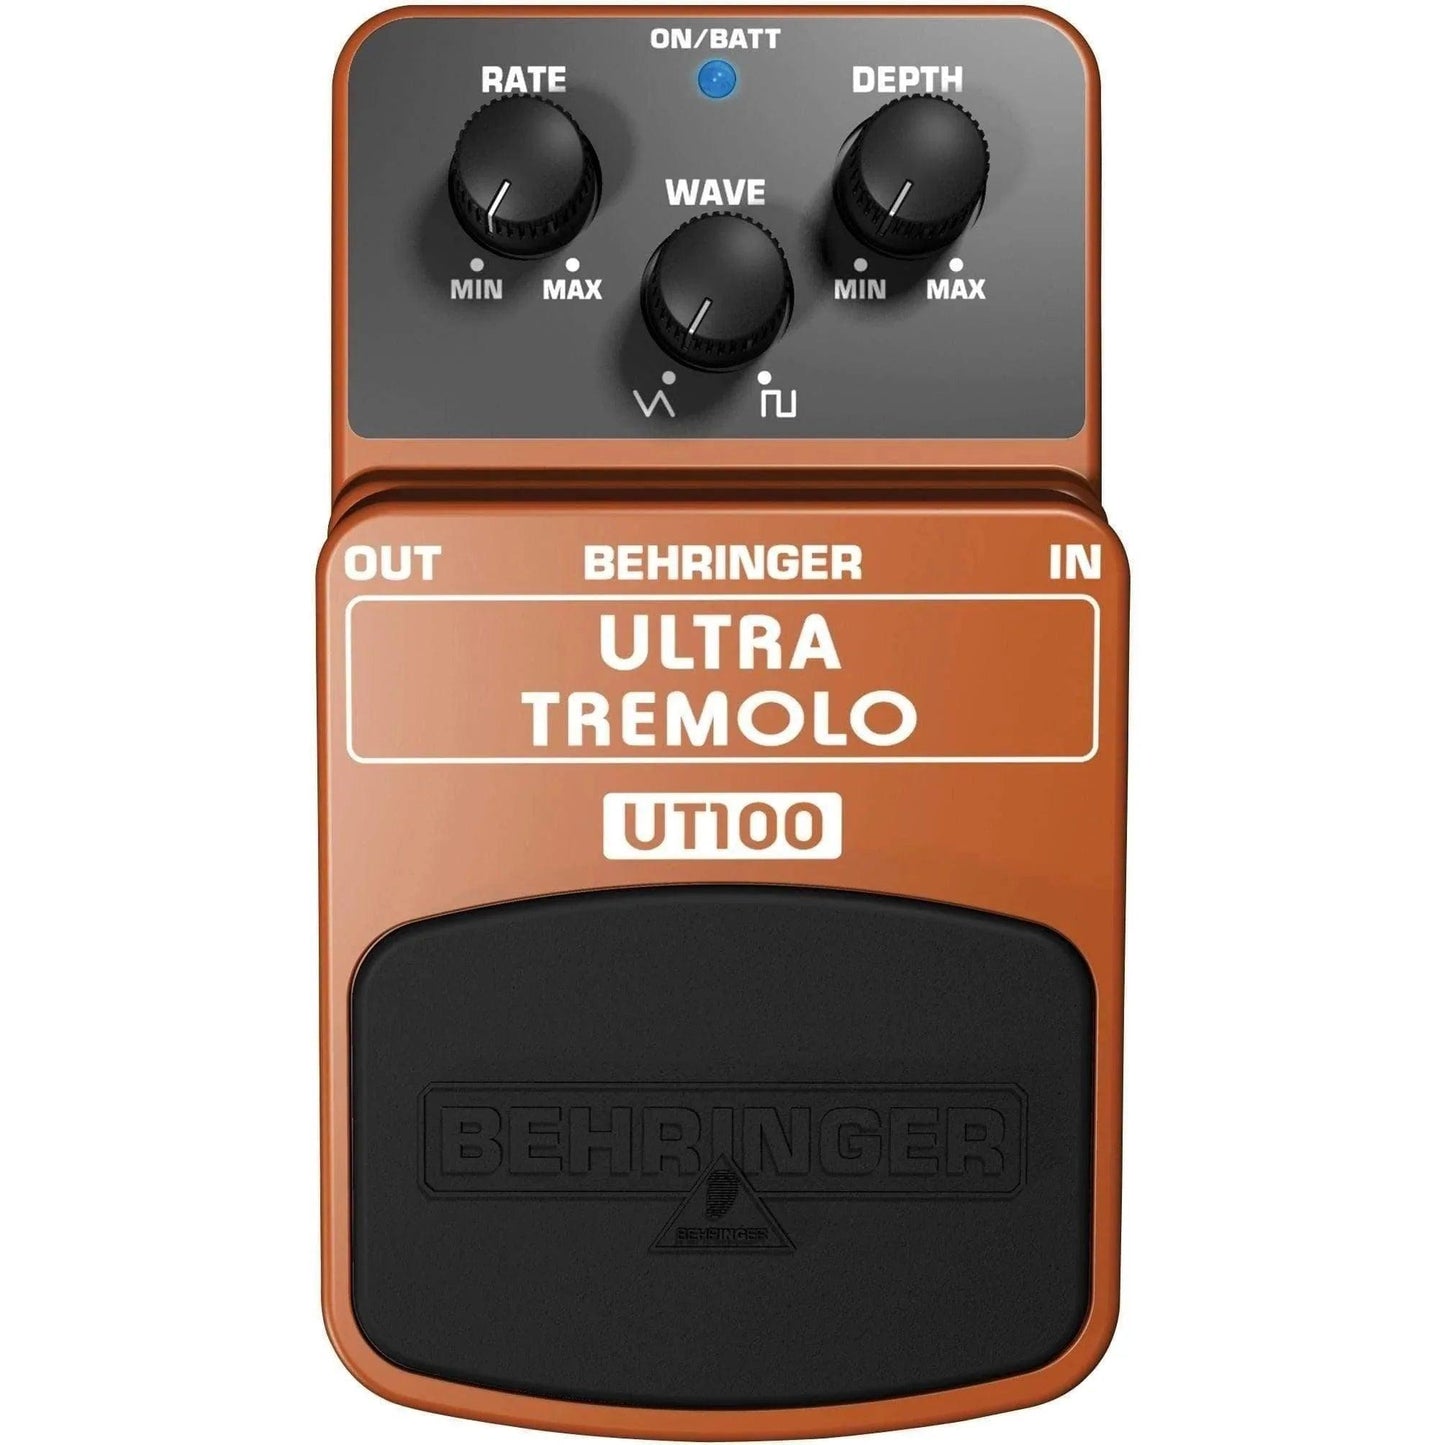 Behringer UT100 Ultra Tremolo Guitar Effects Pedal